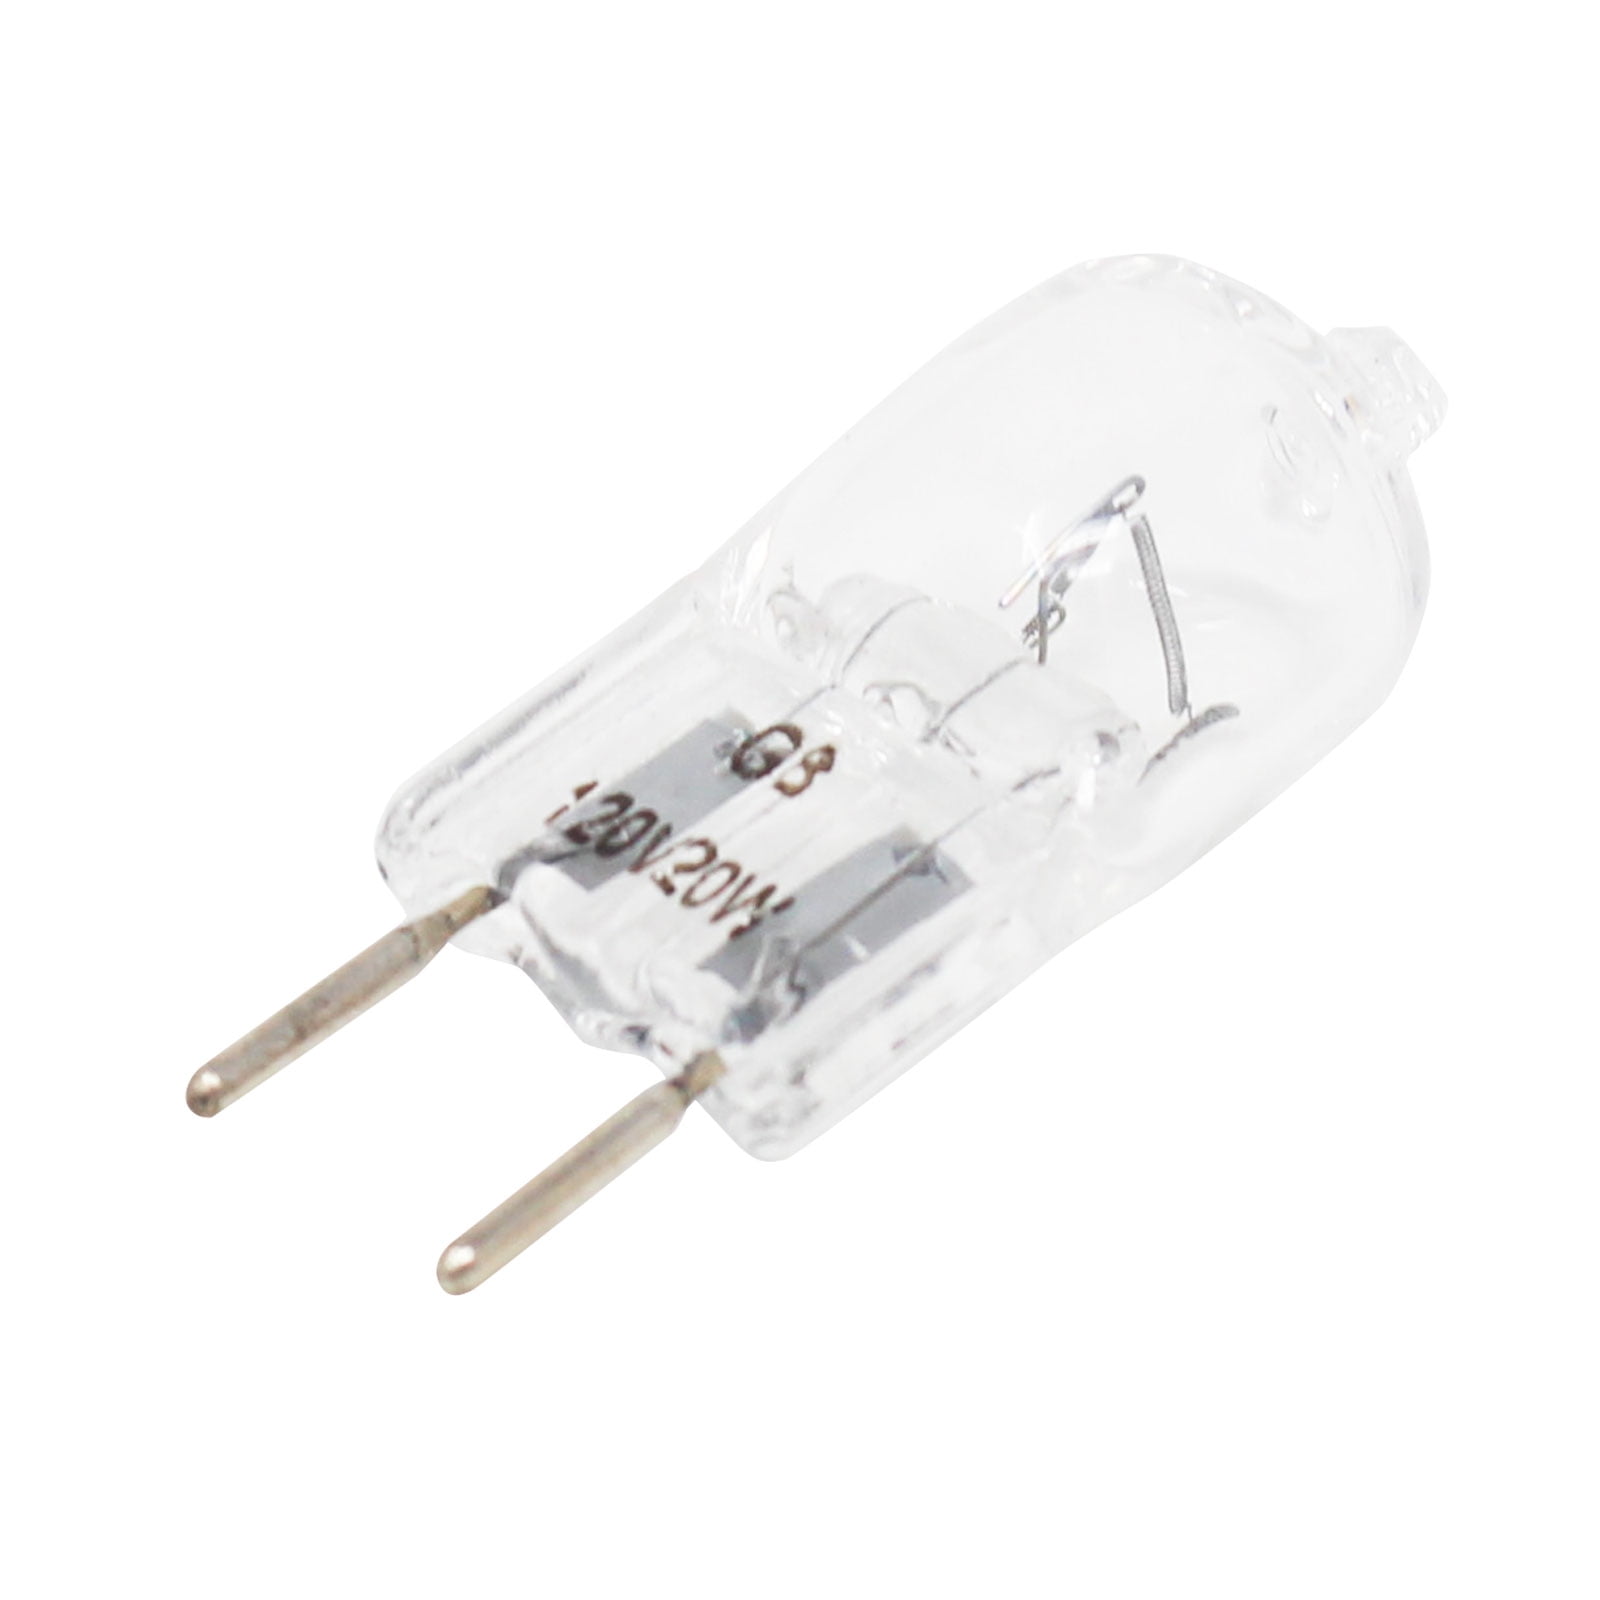 -Bulbs Replacement Light Bulb 120V 20-Watt for GE Microwave WB25X10019  20W 10 